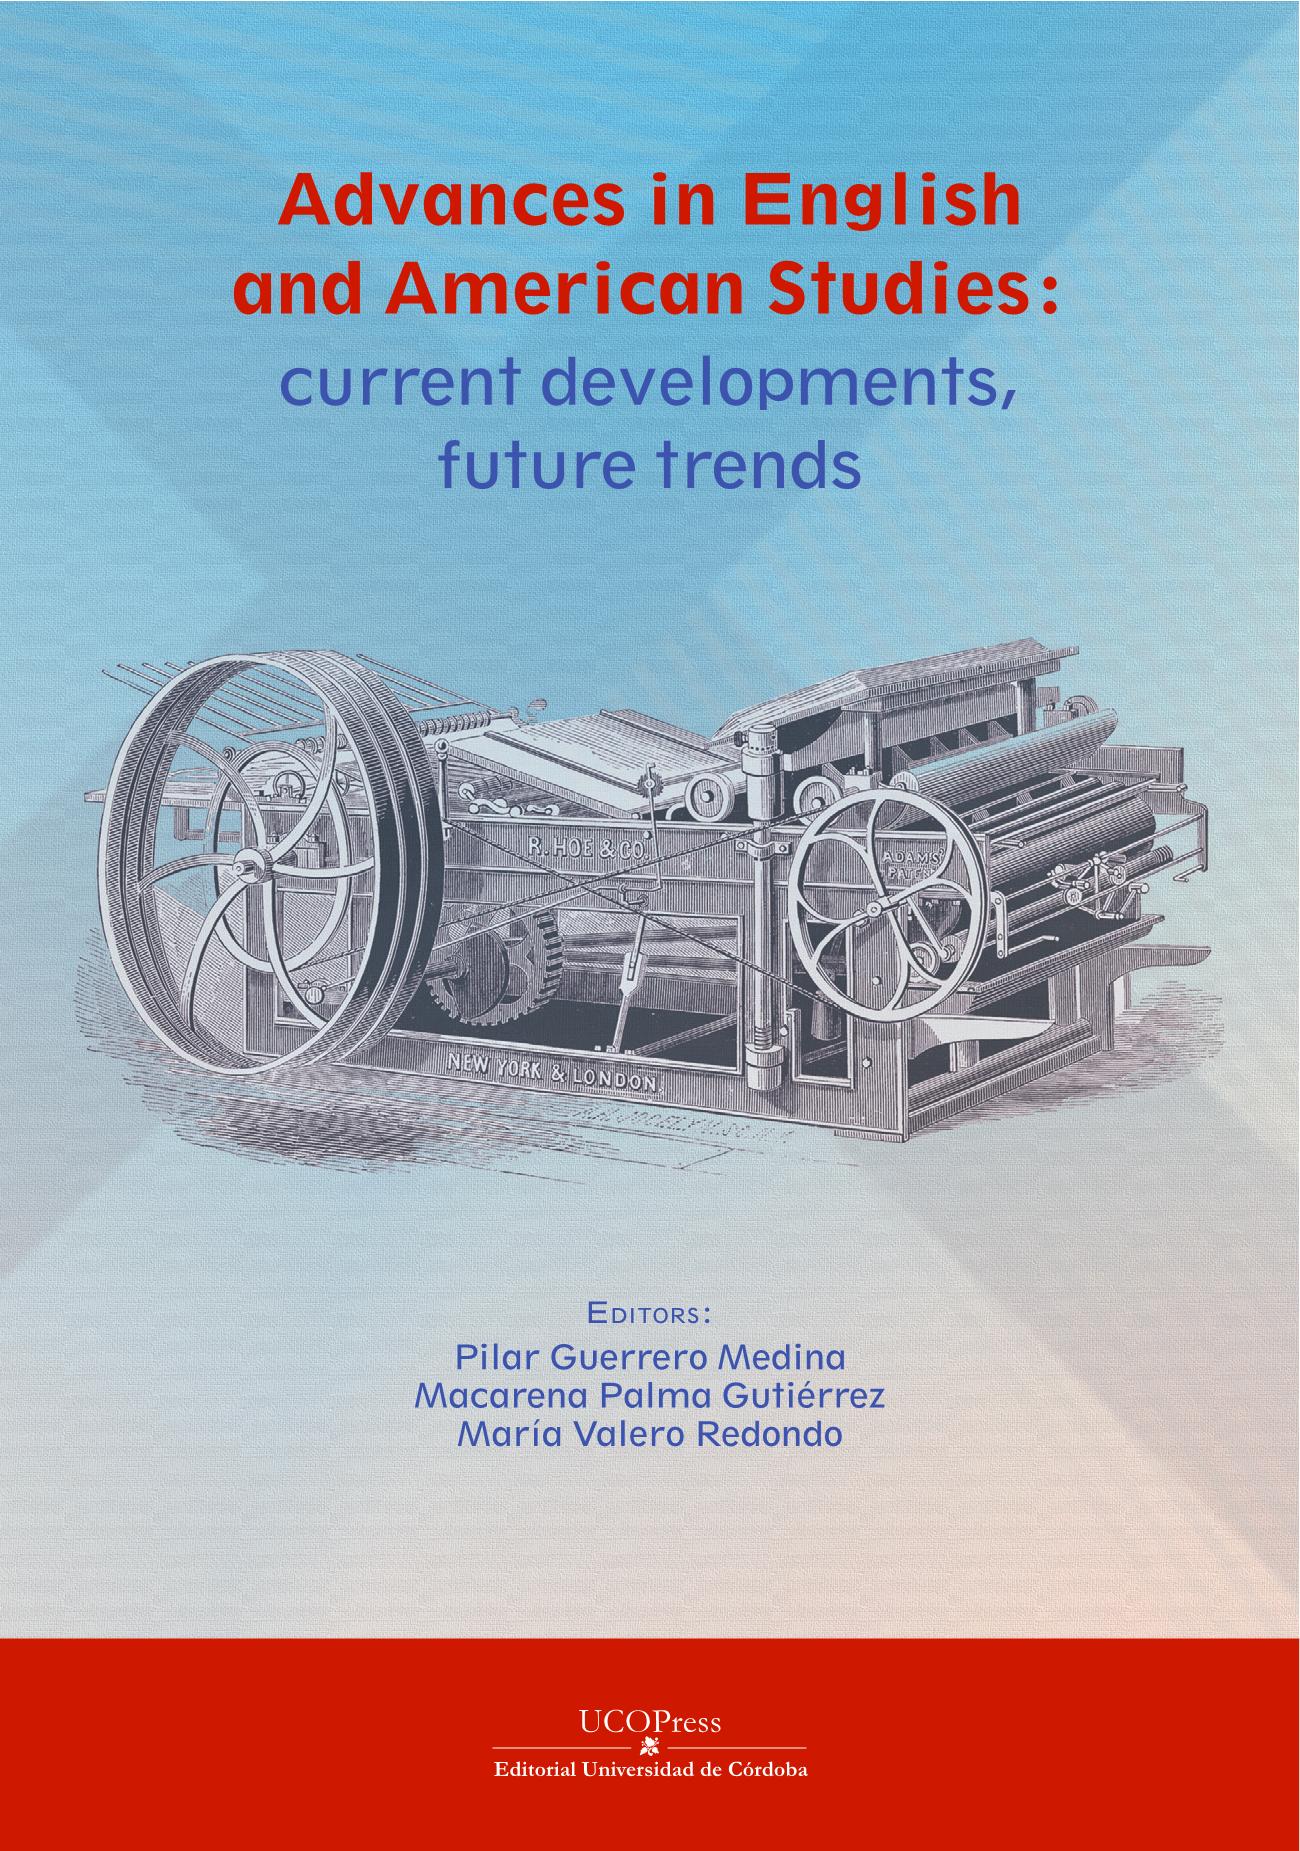 Imagen de portada del libro Advances in English and American Studies